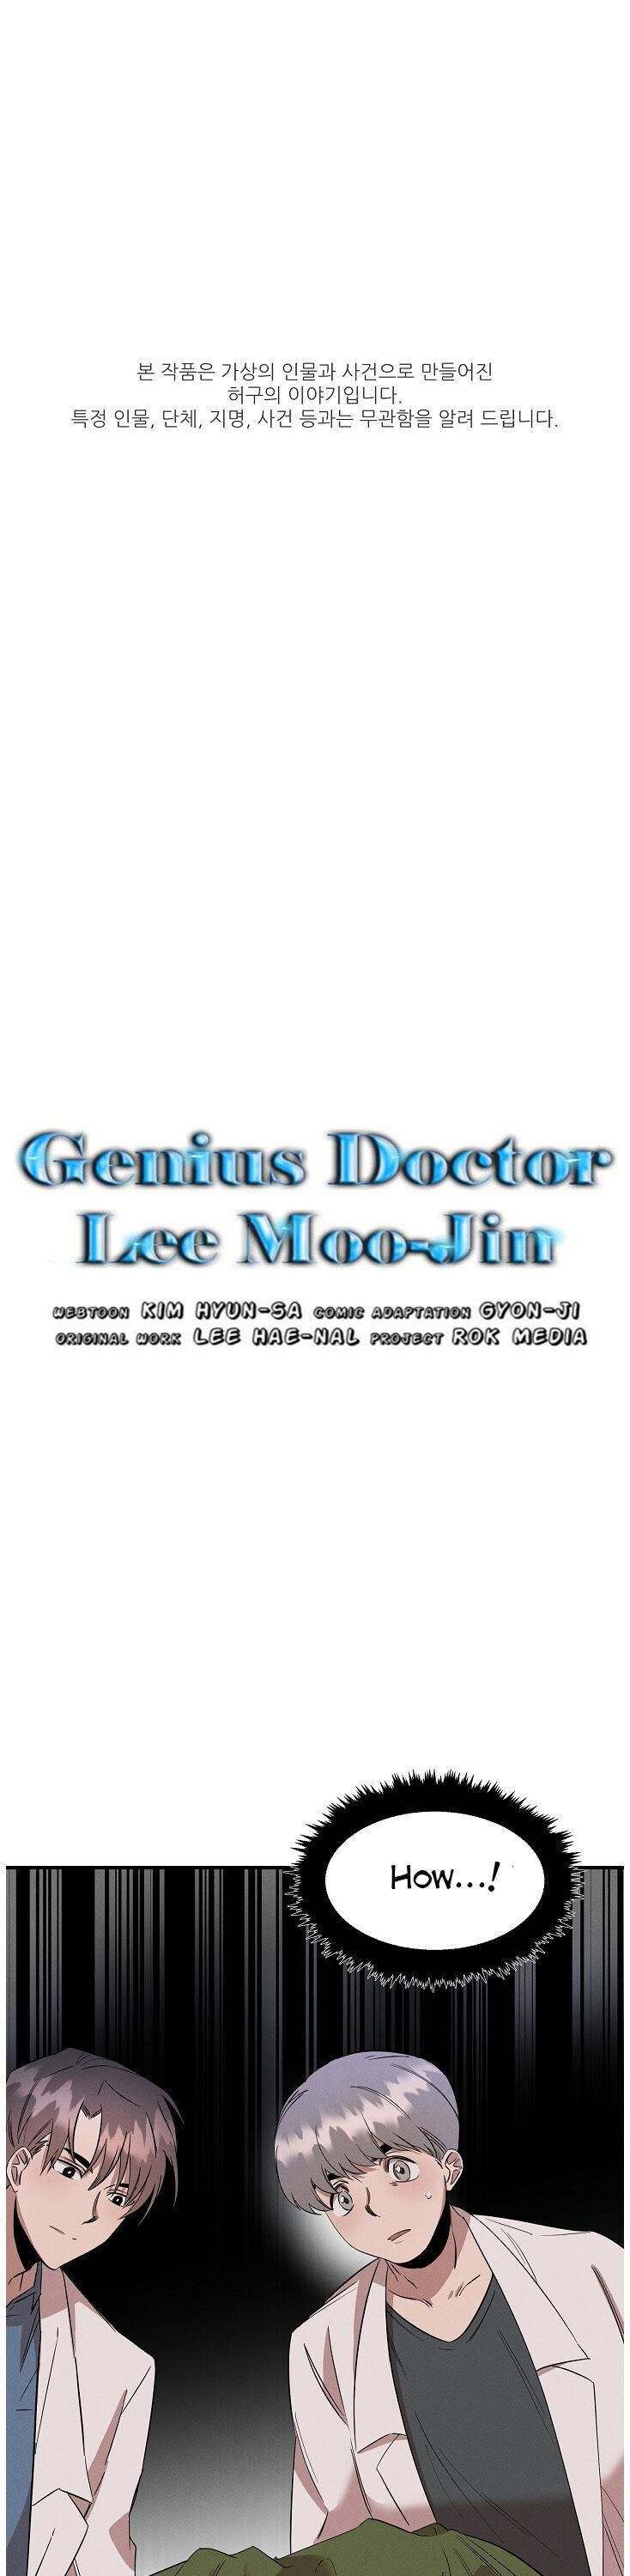 Genius Doctor Lee Moo-jin Chapter 13 page 2